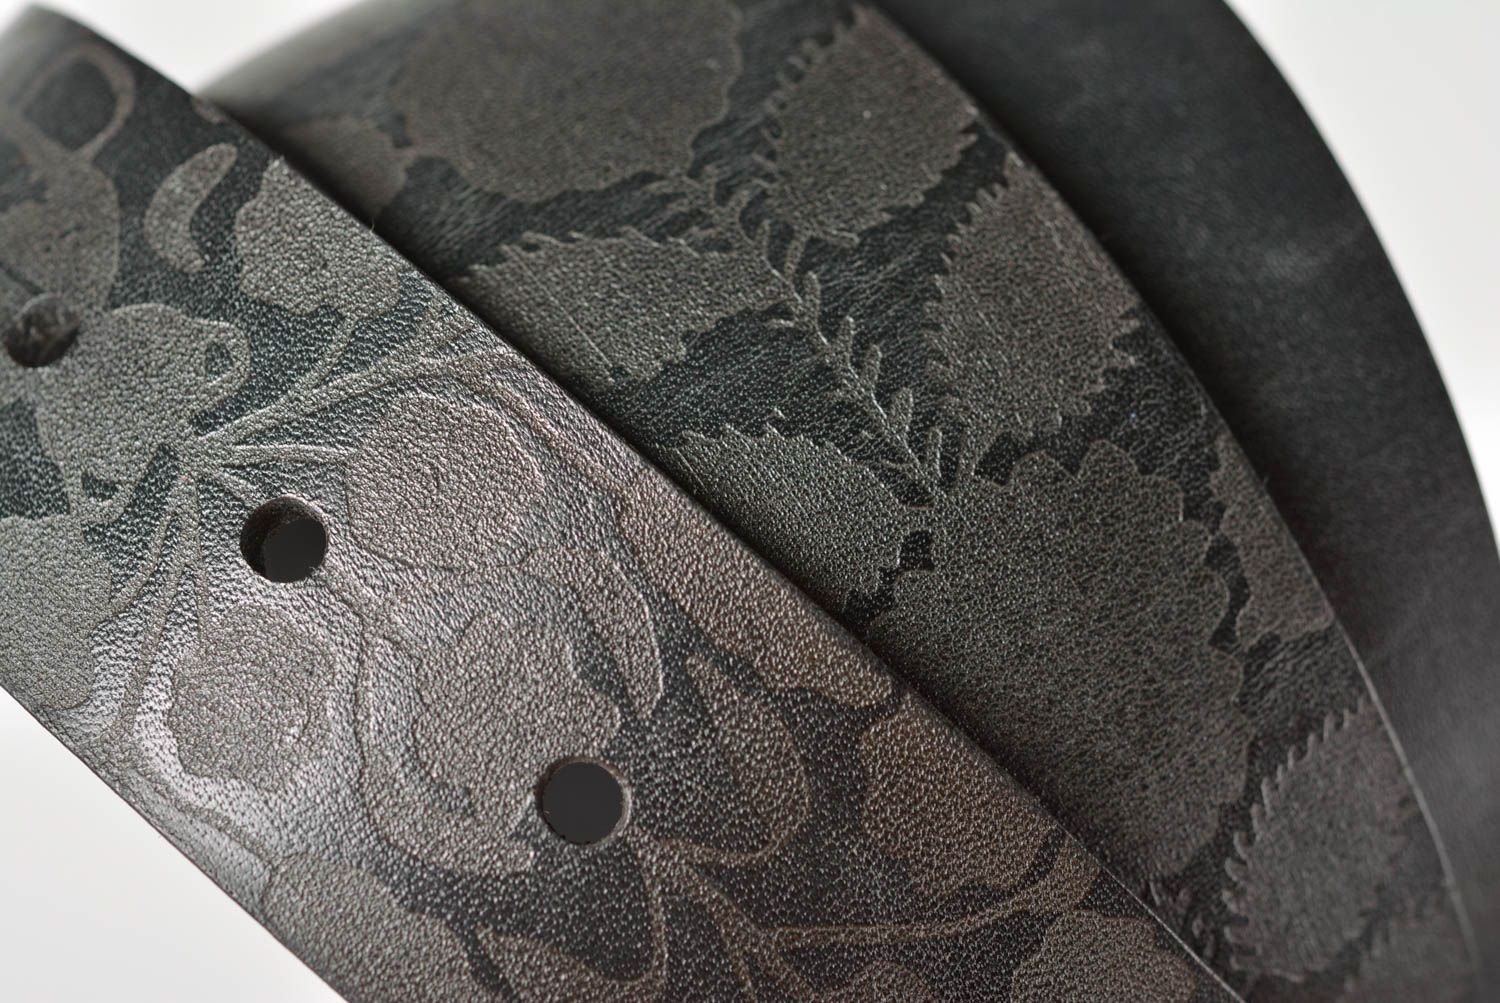 Handmade leather belt designer belts fashion accessories gifts for men photo 3